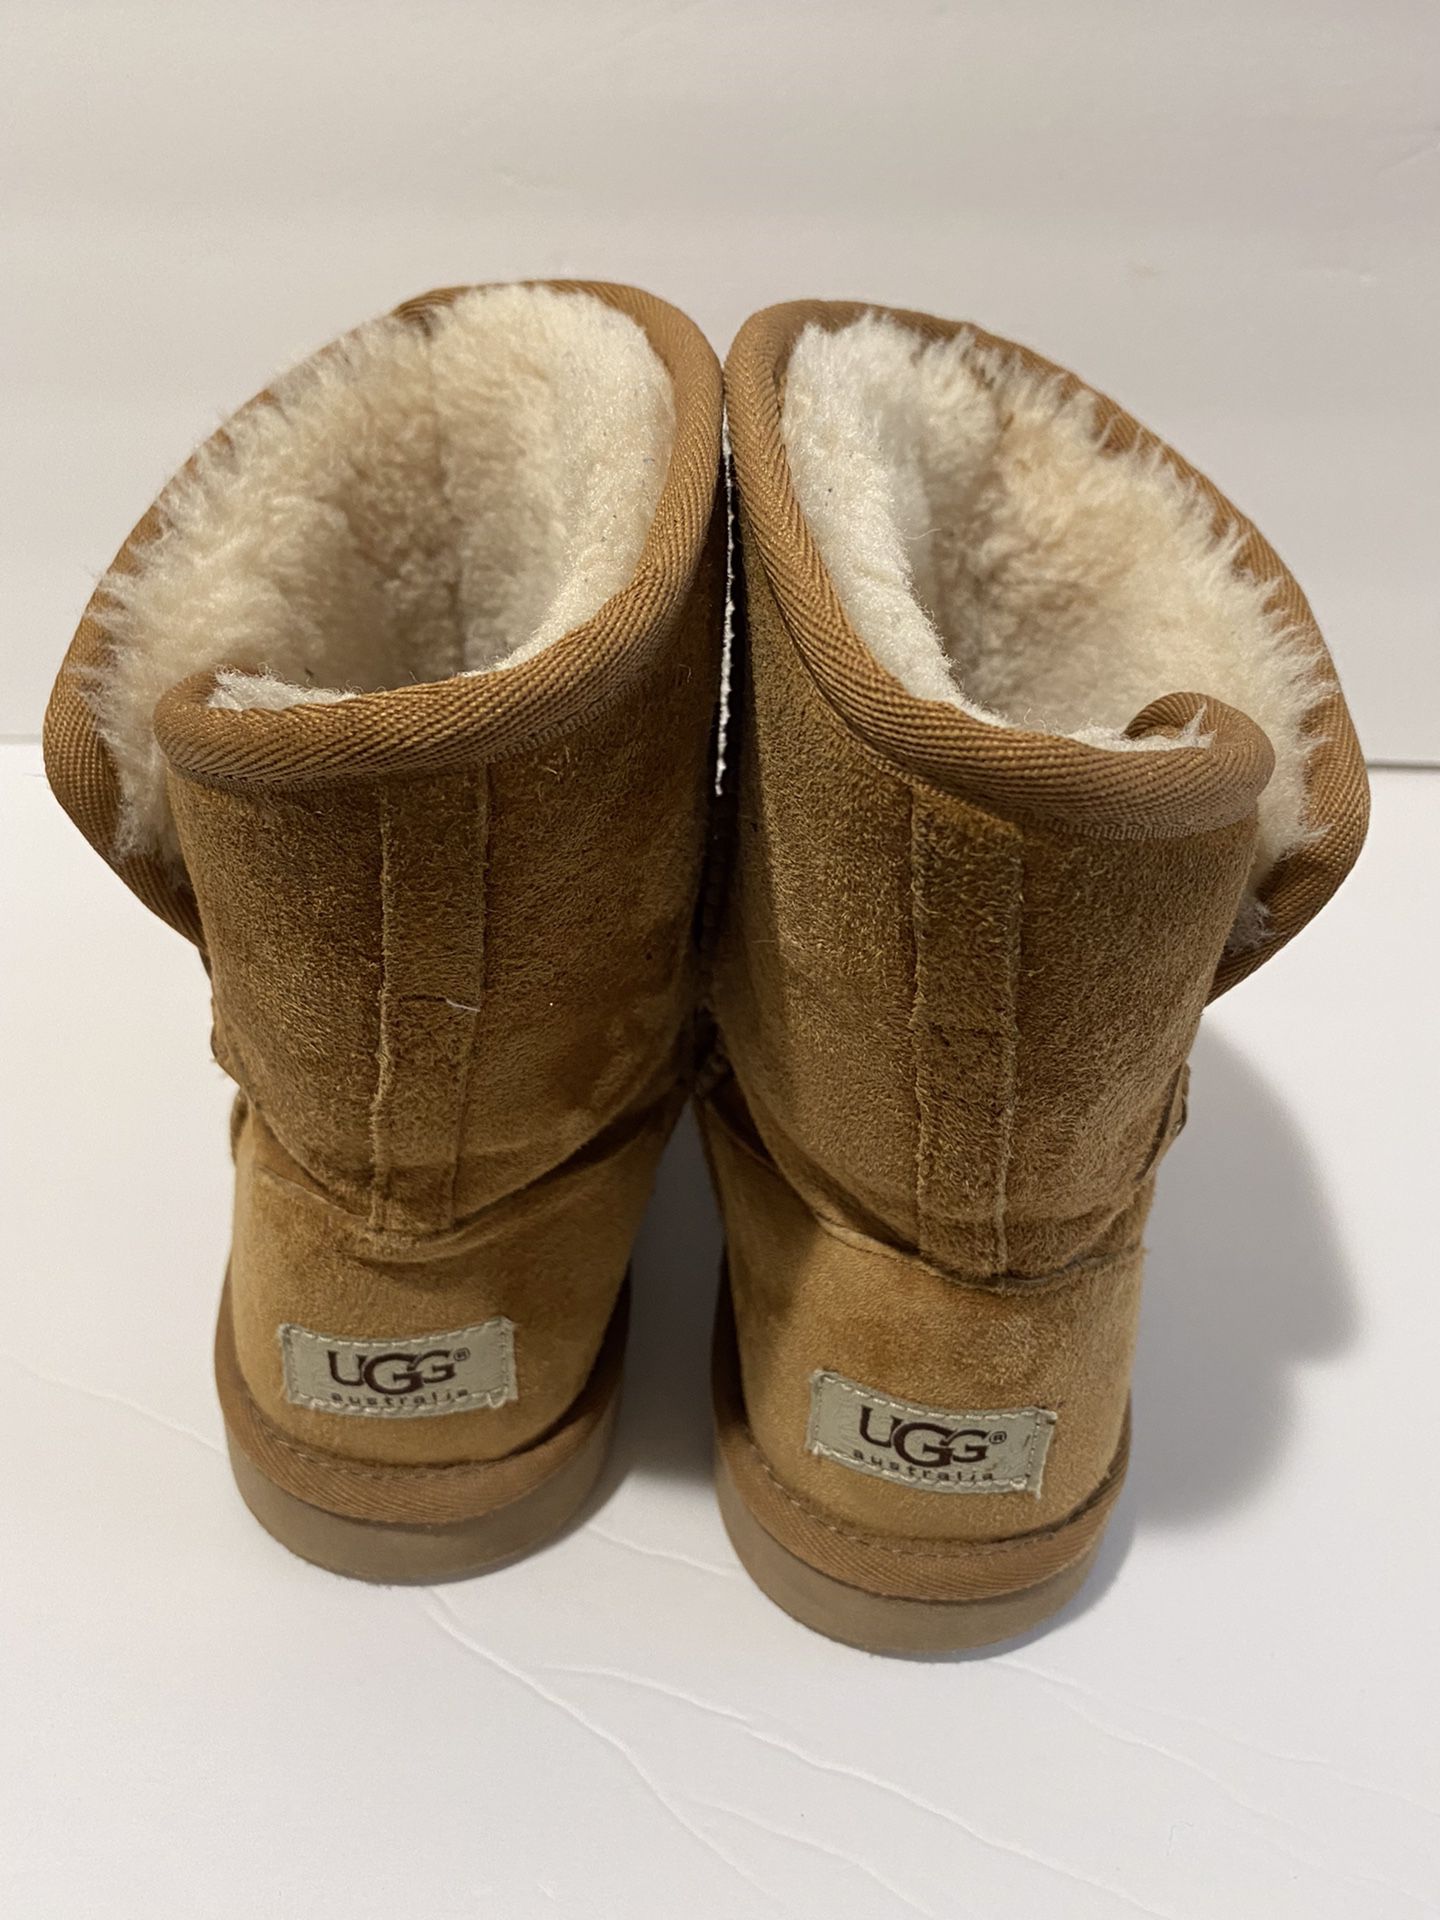 Ugg’s classic short kids boots